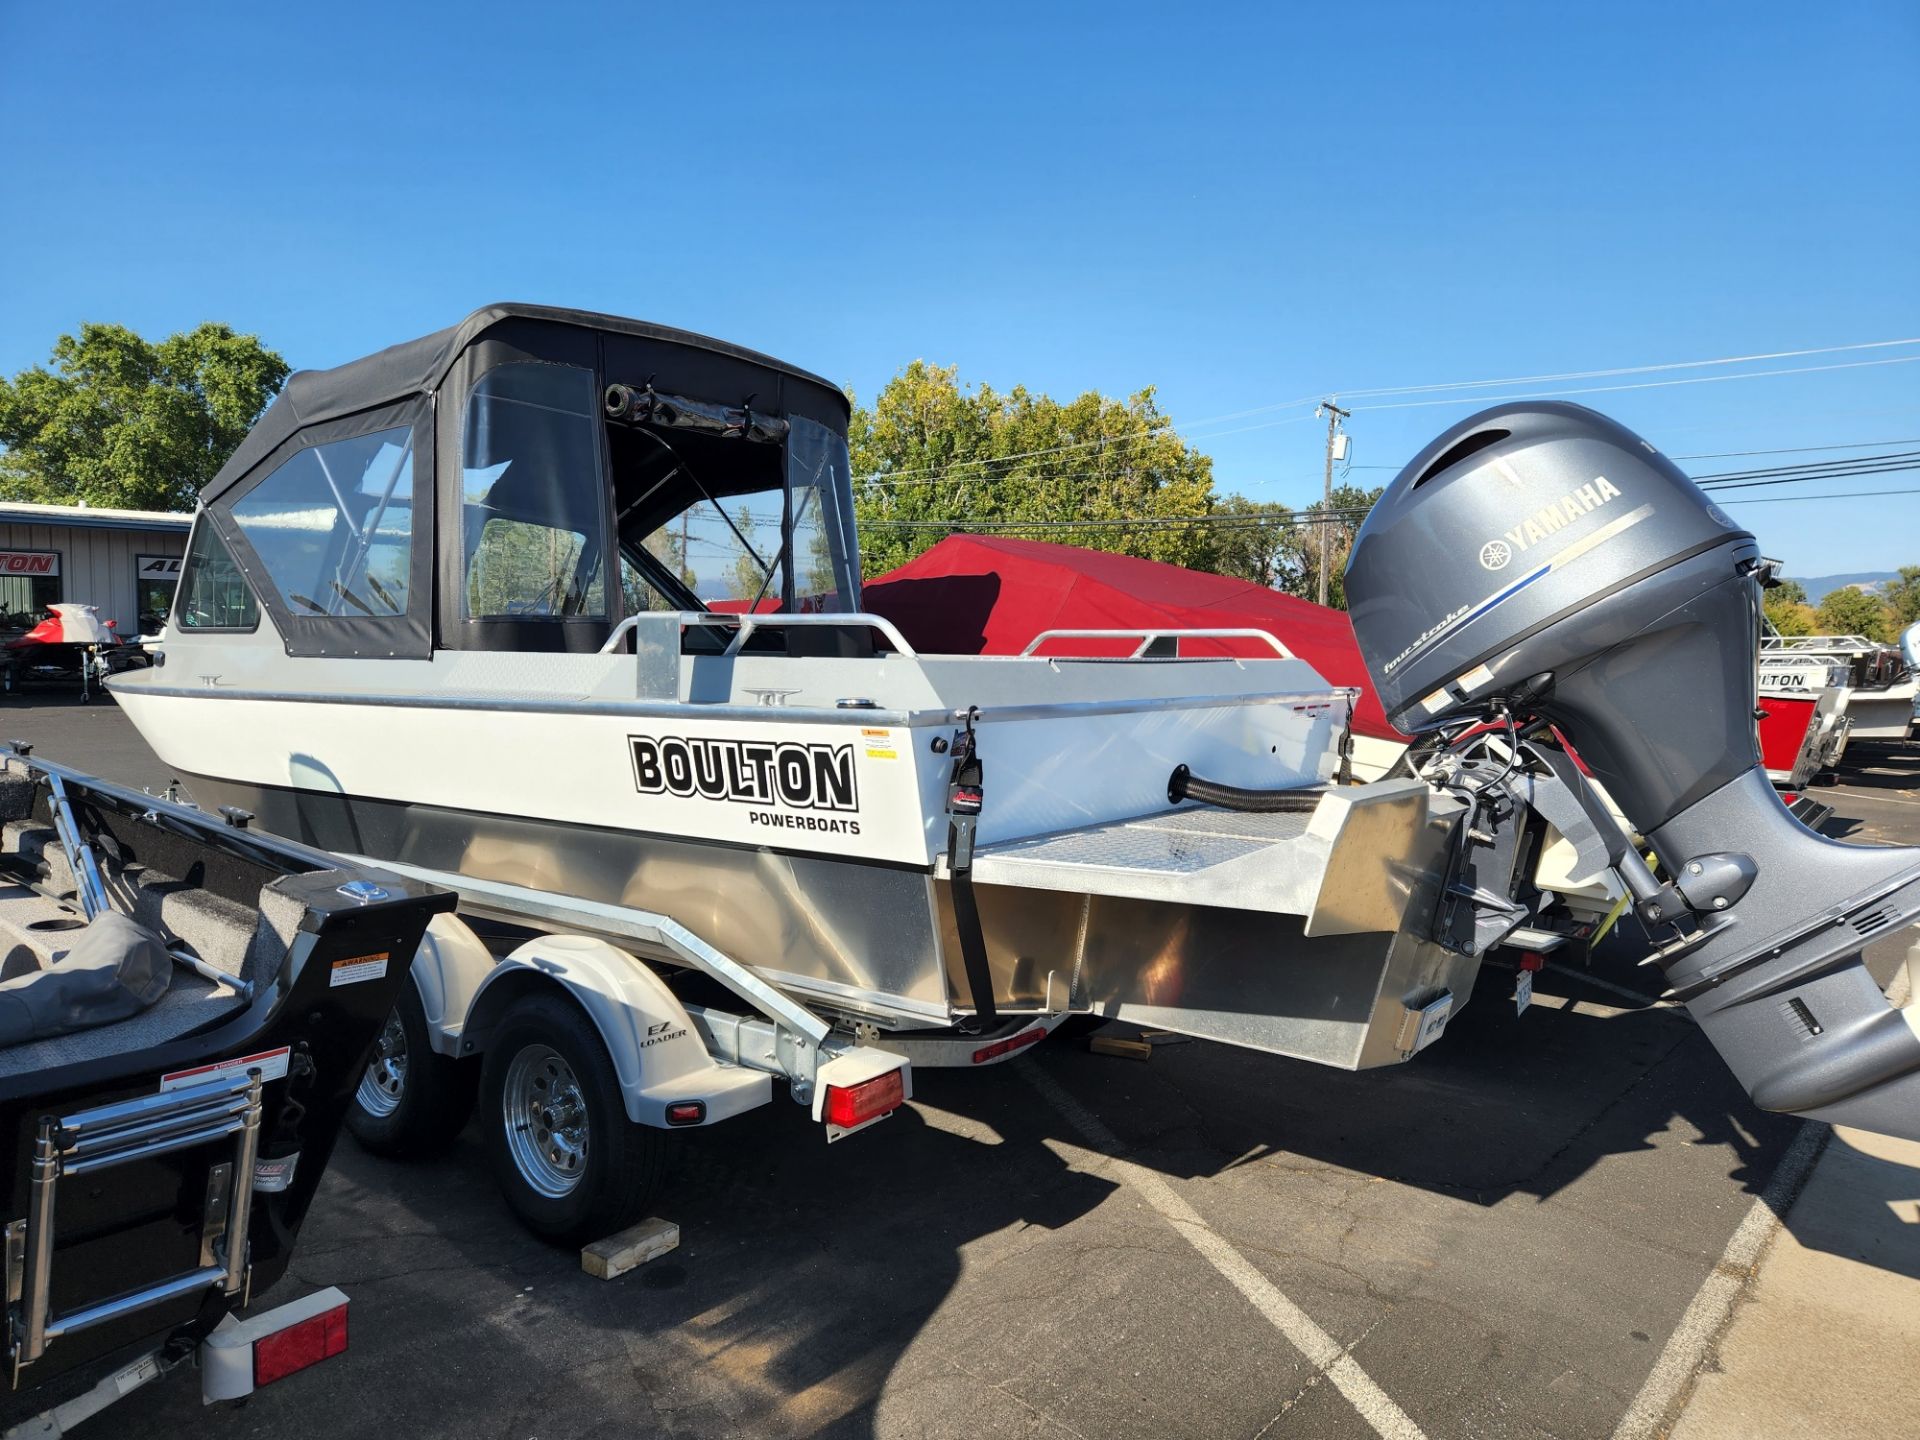 2022 Boulton Powerboats Navigator 20 in Lakeport, California - Photo 2